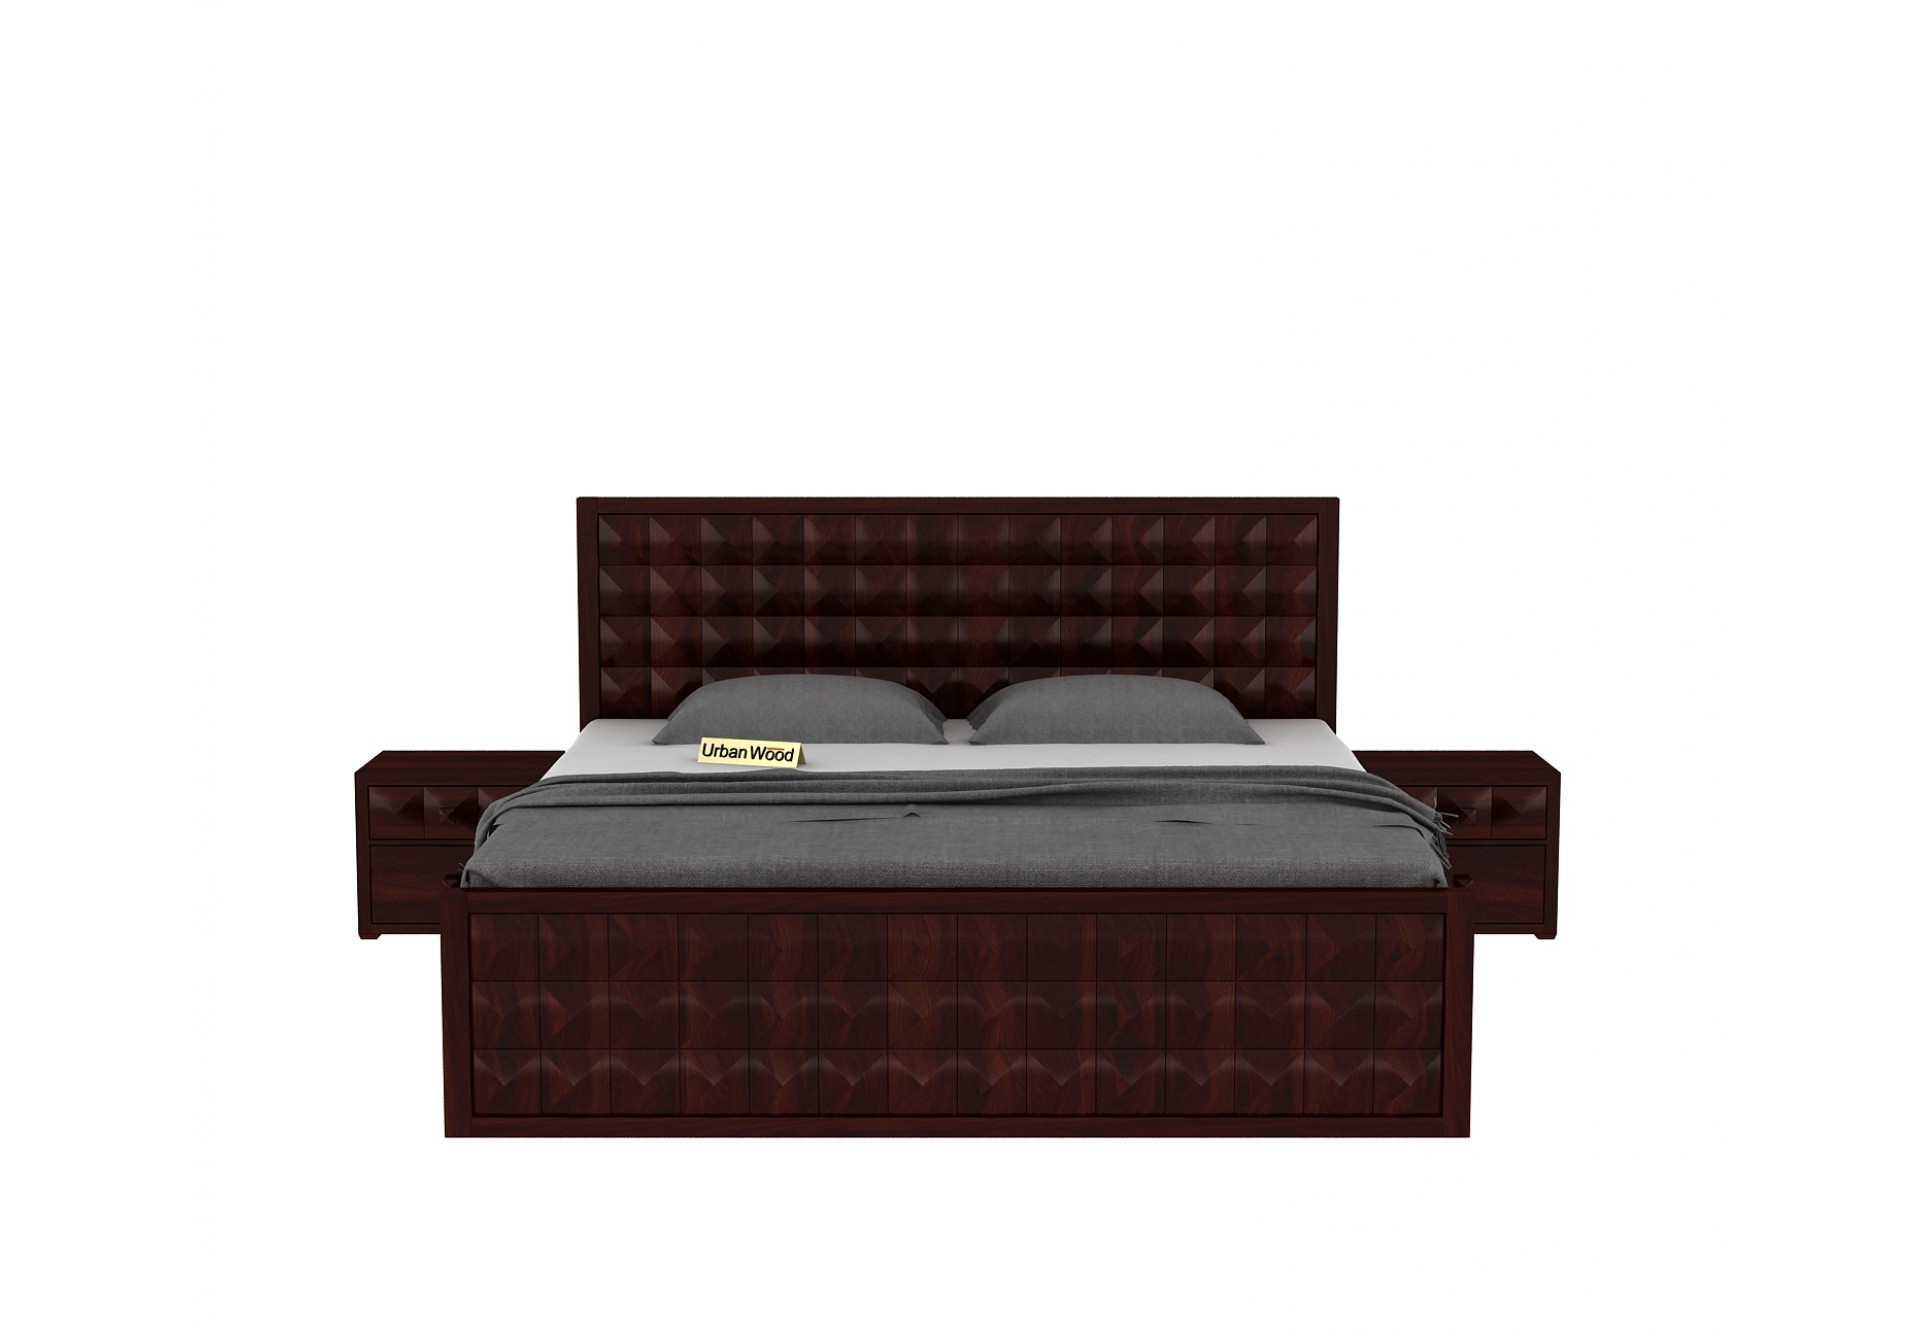 Morgana Bed With Storage ( King Size, Walnut Finish )